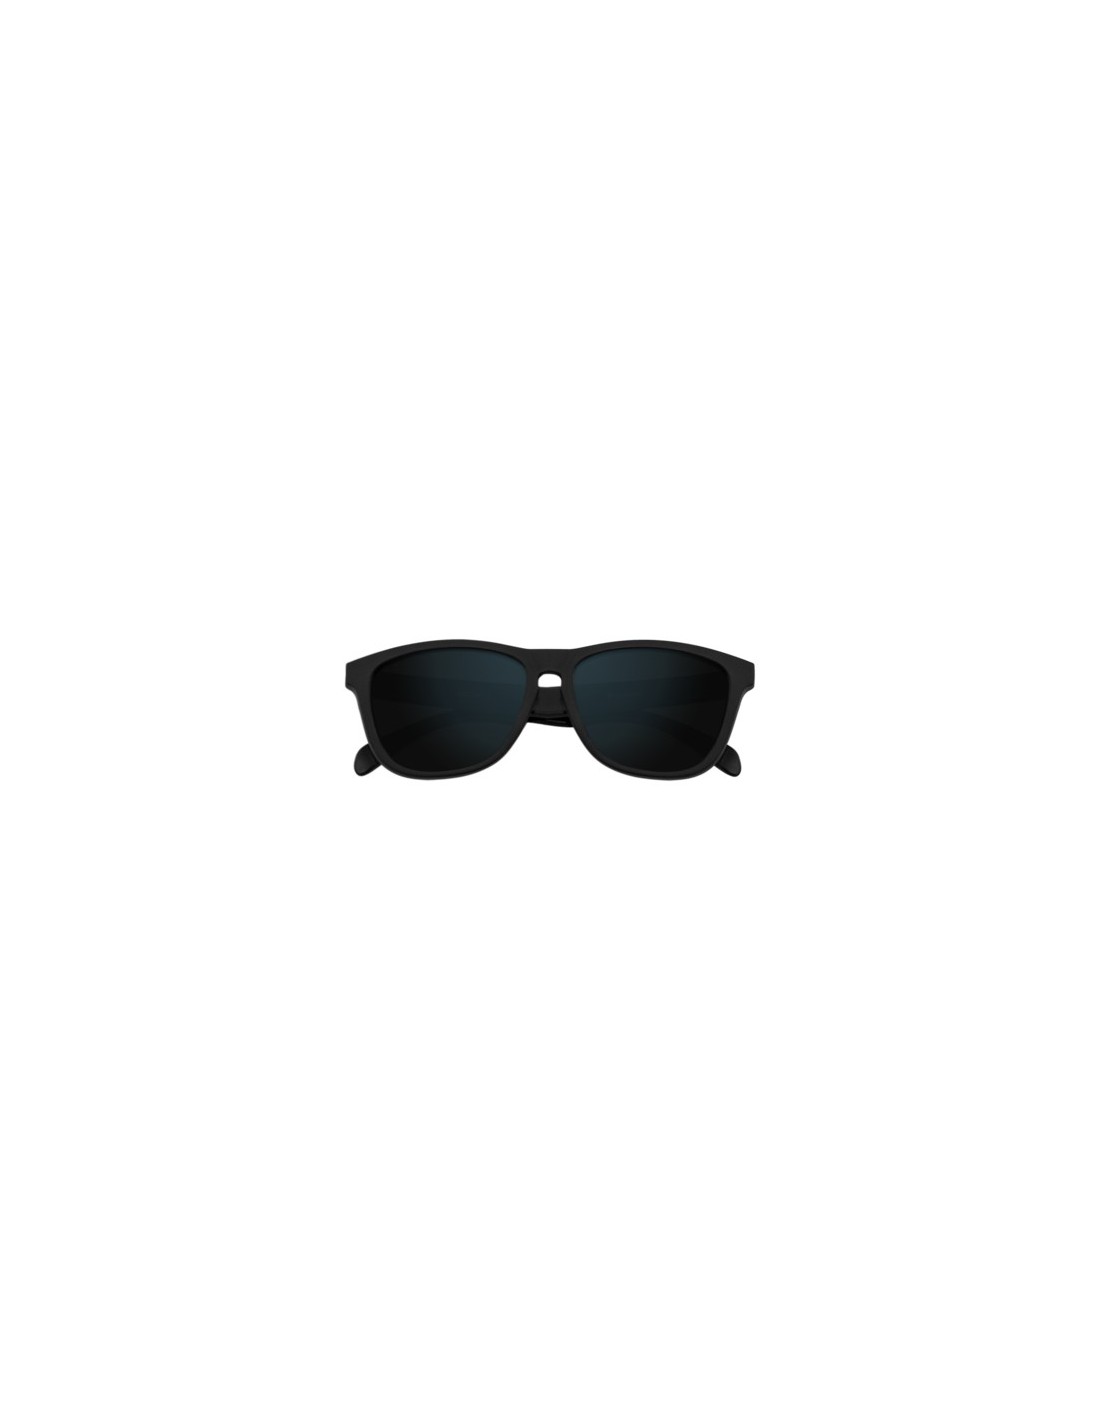 Northweek Gafas de sol Sunglasses Wall All Black lente negra Polarizada 